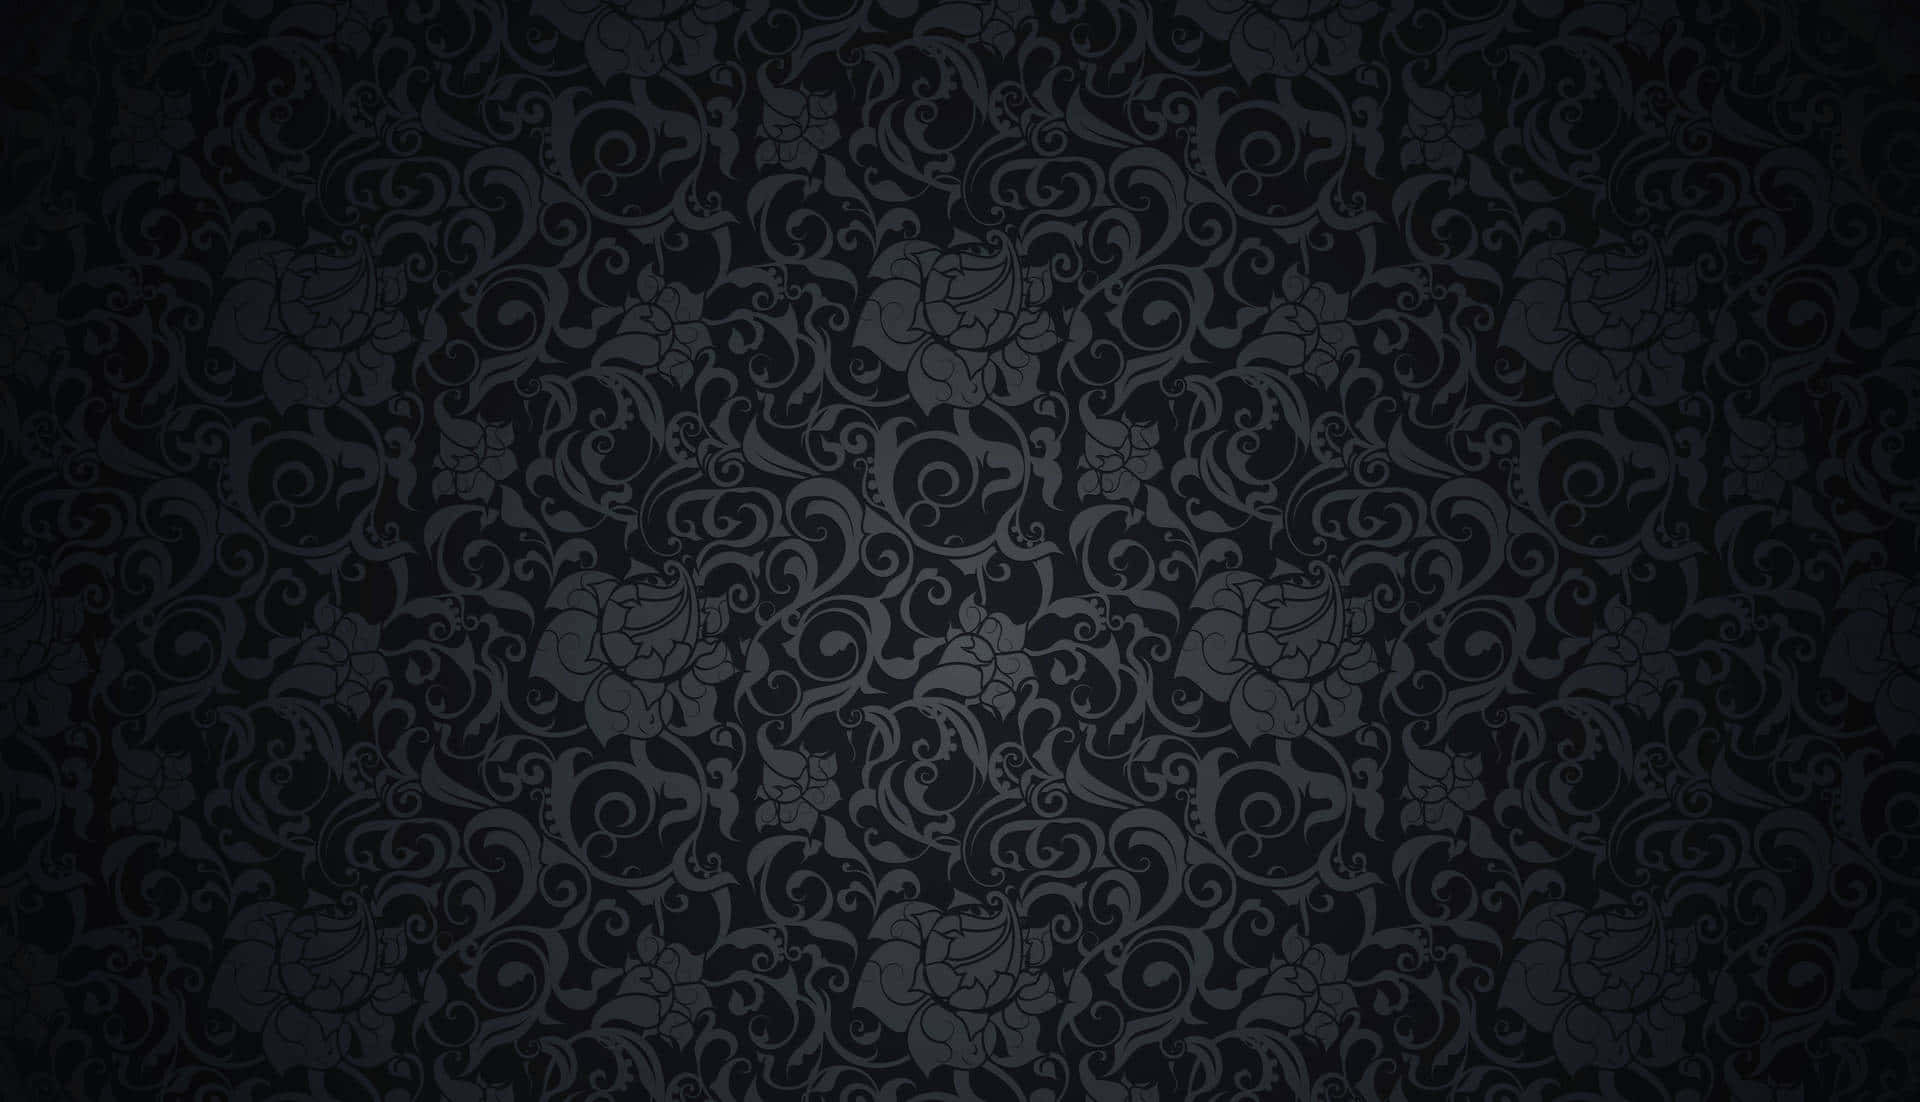 Black Floral Wallpaper Vector | Price 1 Credit Usd $1